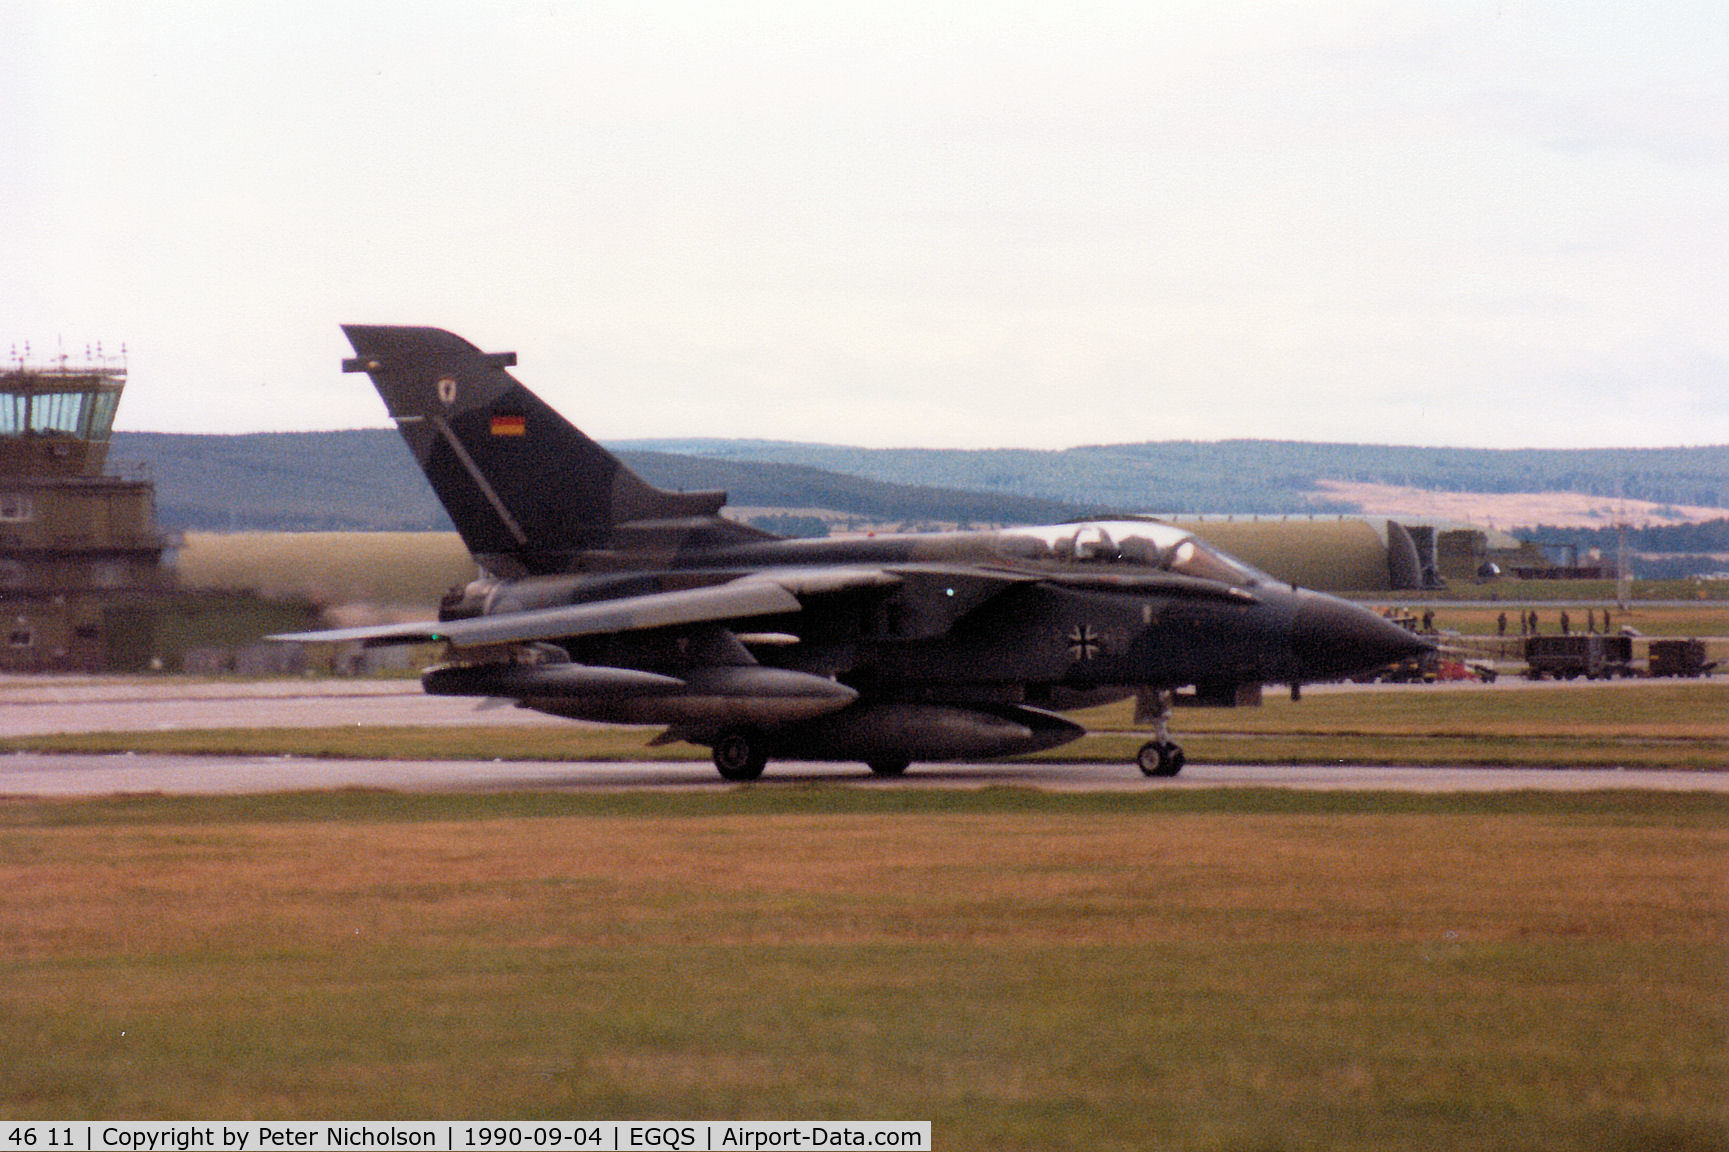 46 11, Panavia Tornado IDS C/N 769/GS244/4311, Tornado IDS of Marineflieger MFG-1 preparing to join the active runway at RAF Lossiemouth in September 1990.